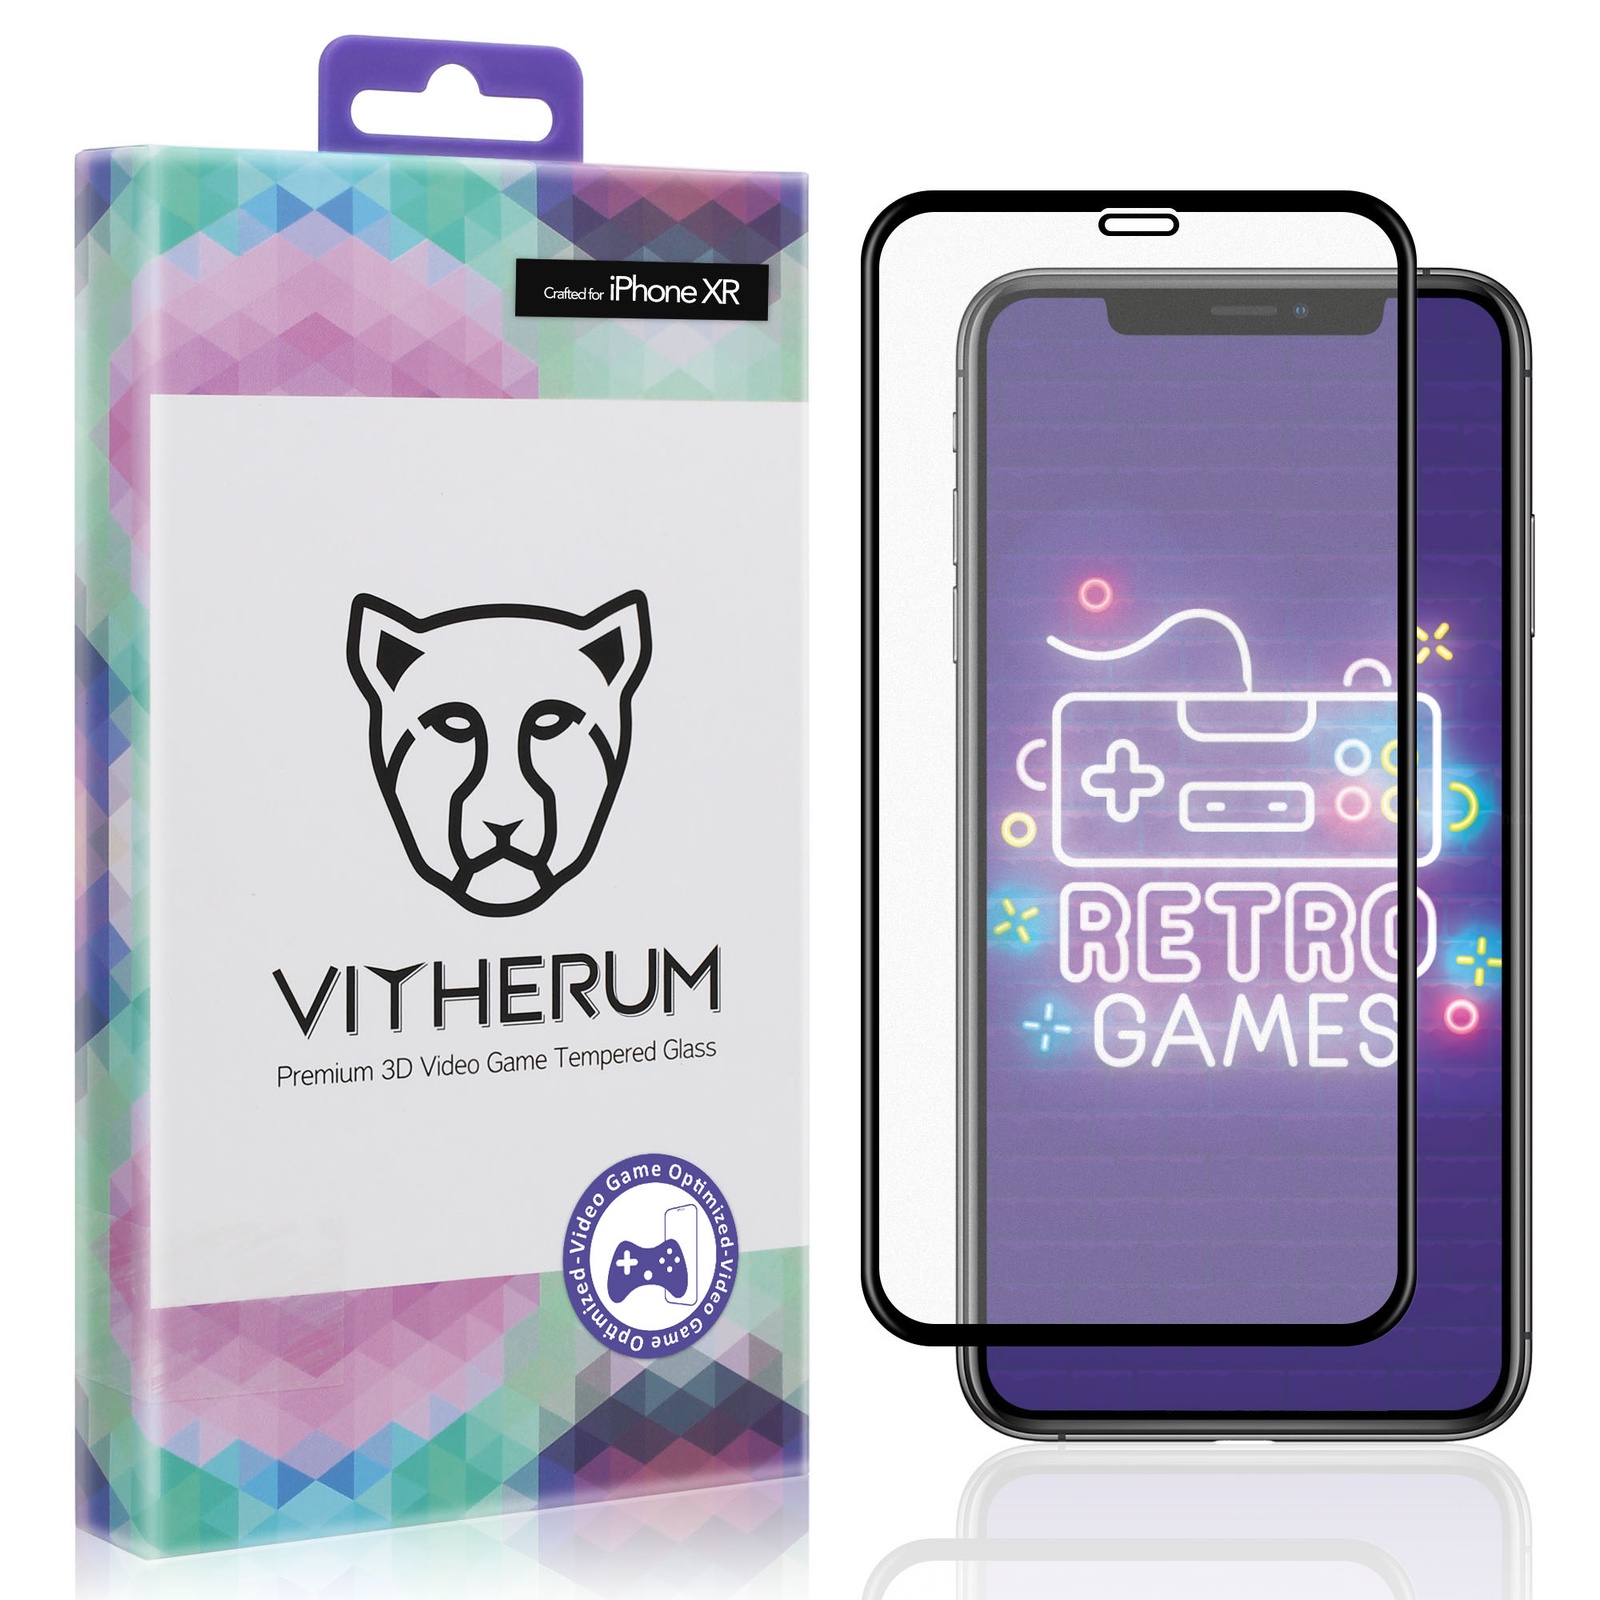 фото Защитное стекло VITHERUM OPAL Premium 3D Curved VideoGame Tempered Glass с черной рамкой для iPhone XR (VTHOPL0003)